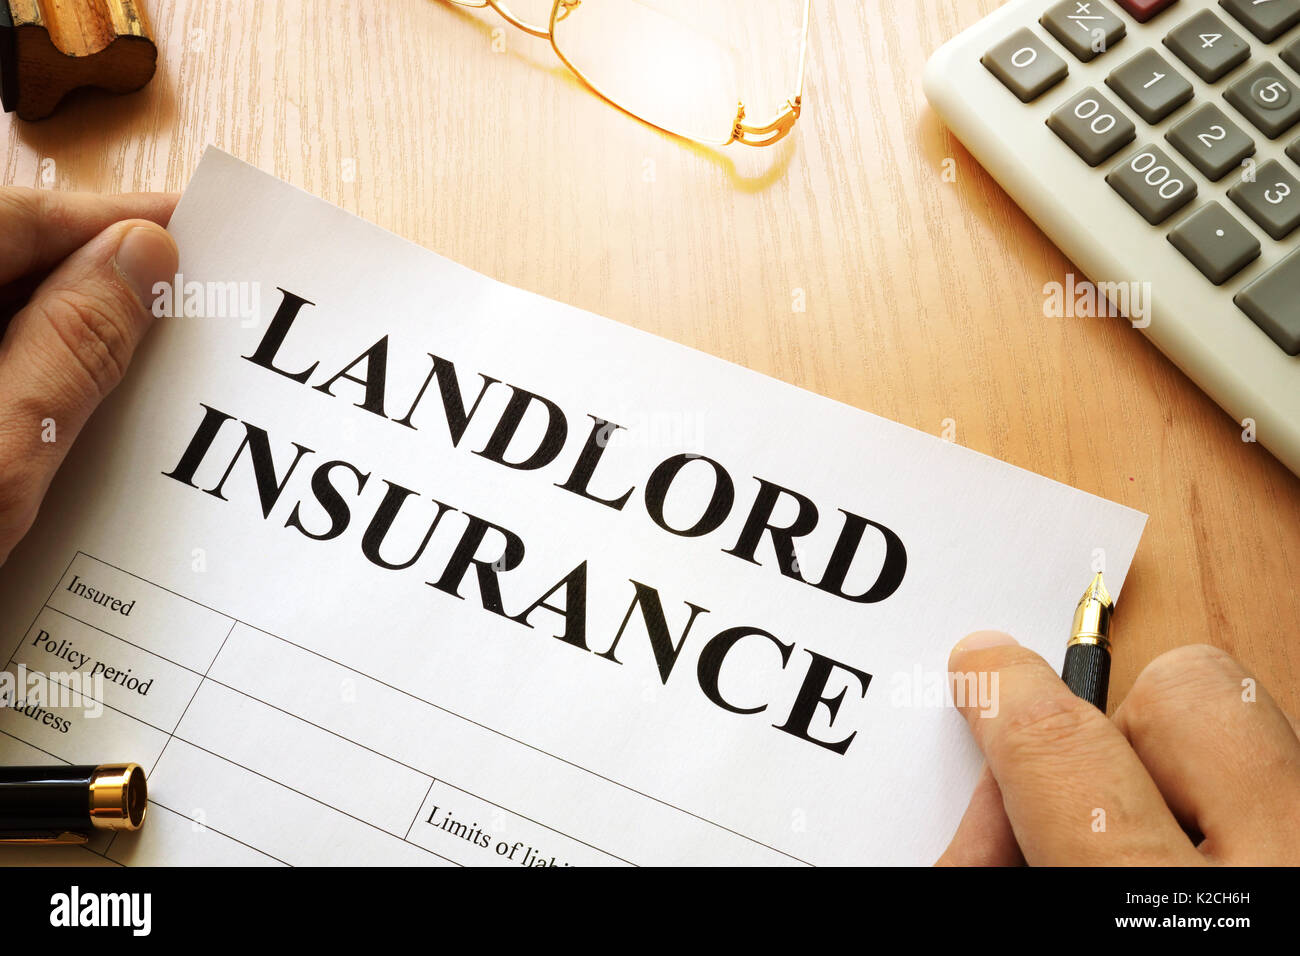 Landlord insurance on a desk. Stock Photo